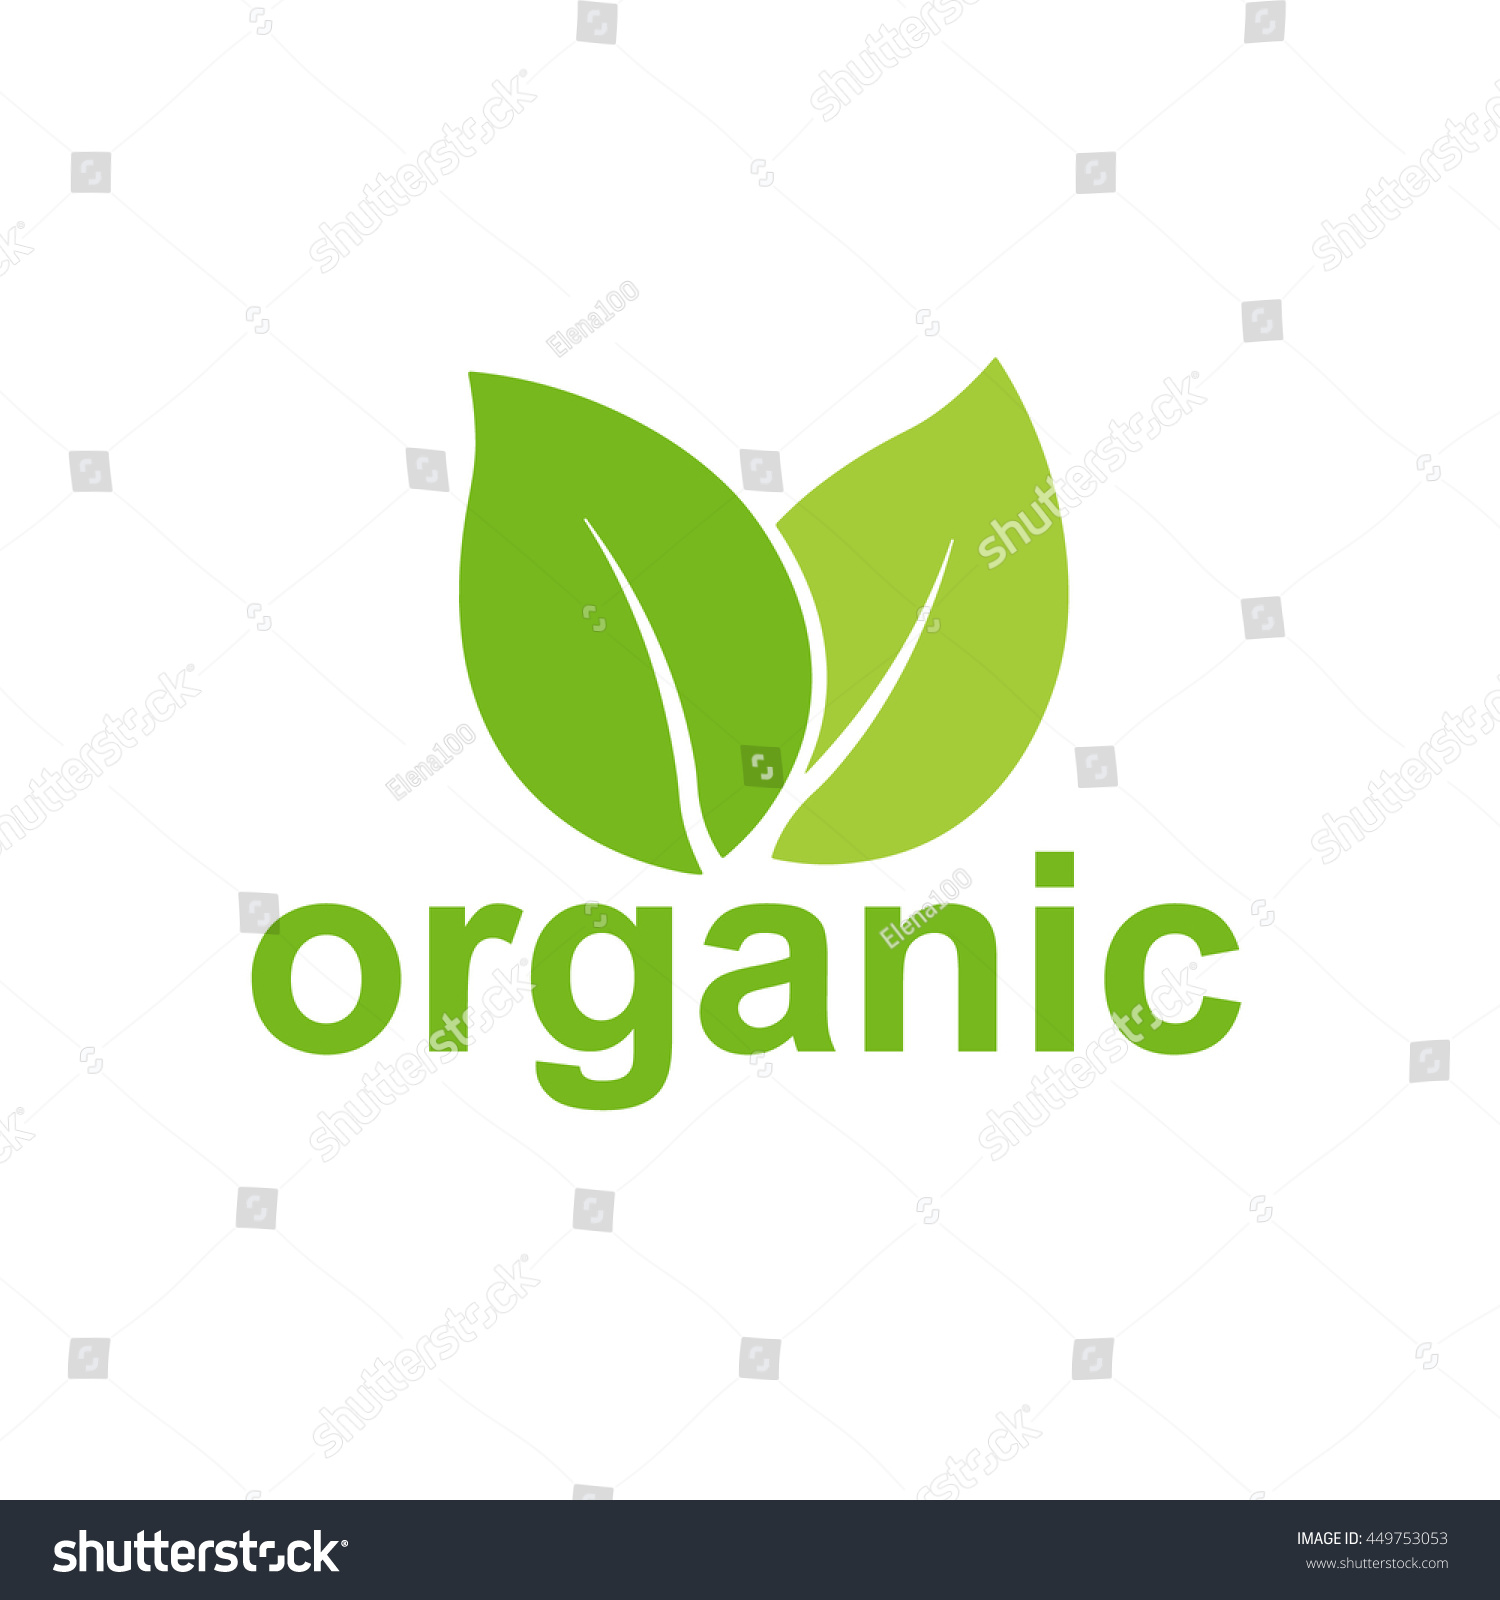 Organic icon #449753053